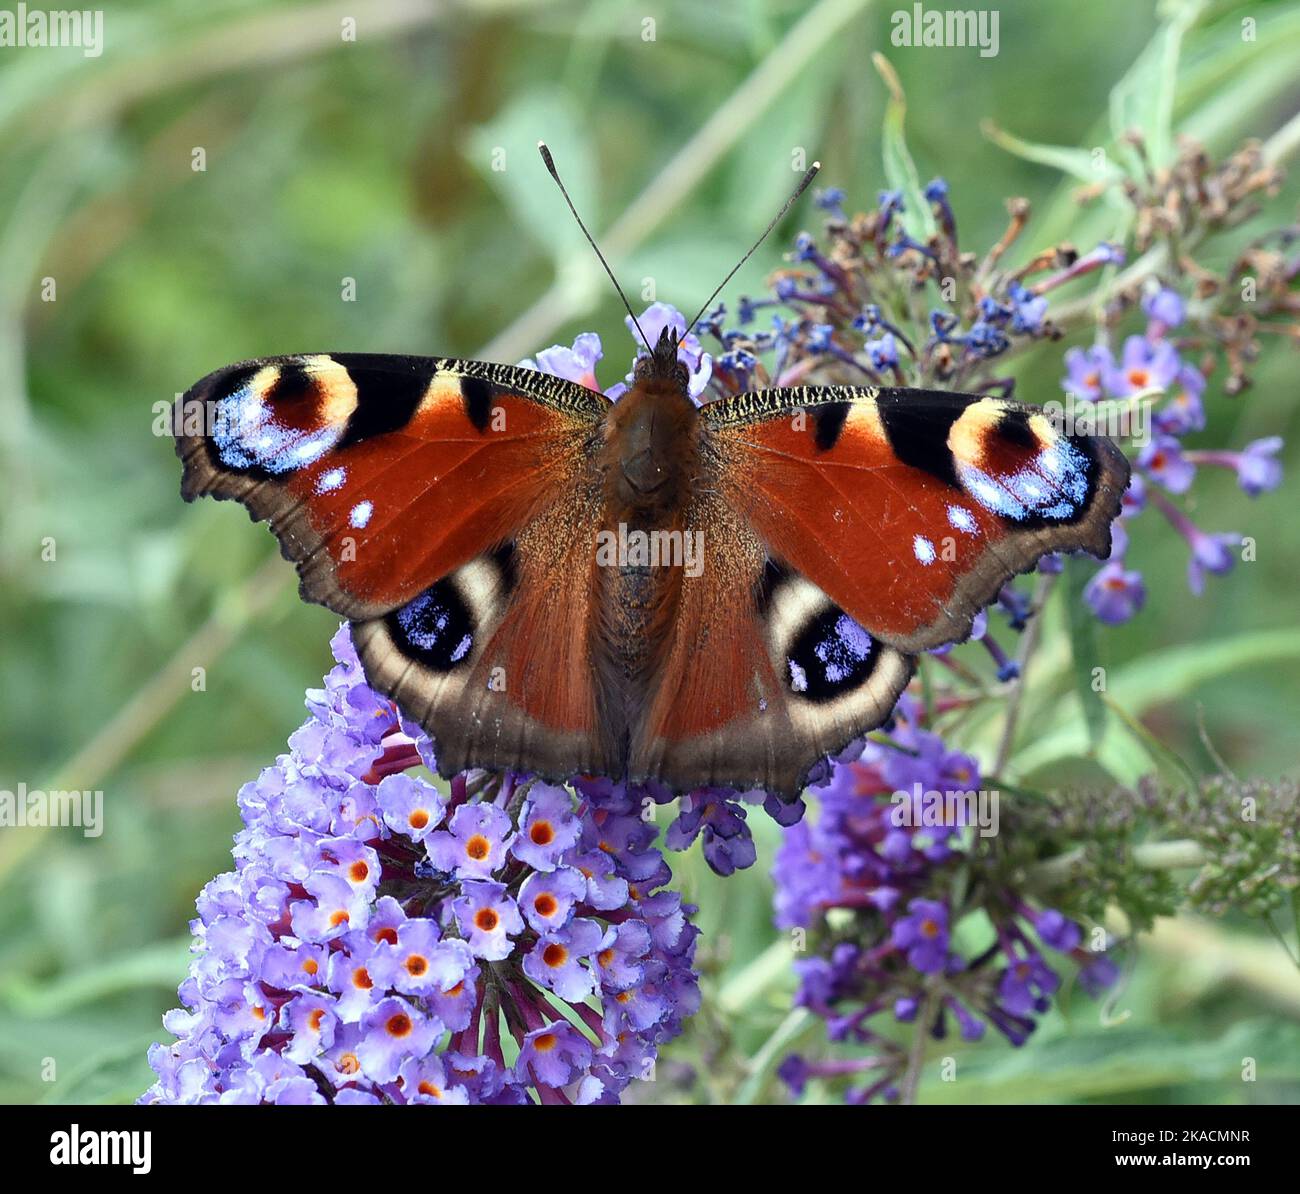 Schmetterlinge sind Insekten mit grossen Fluegeln. Las mariposas son insectos con alas grandes. Foto de stock